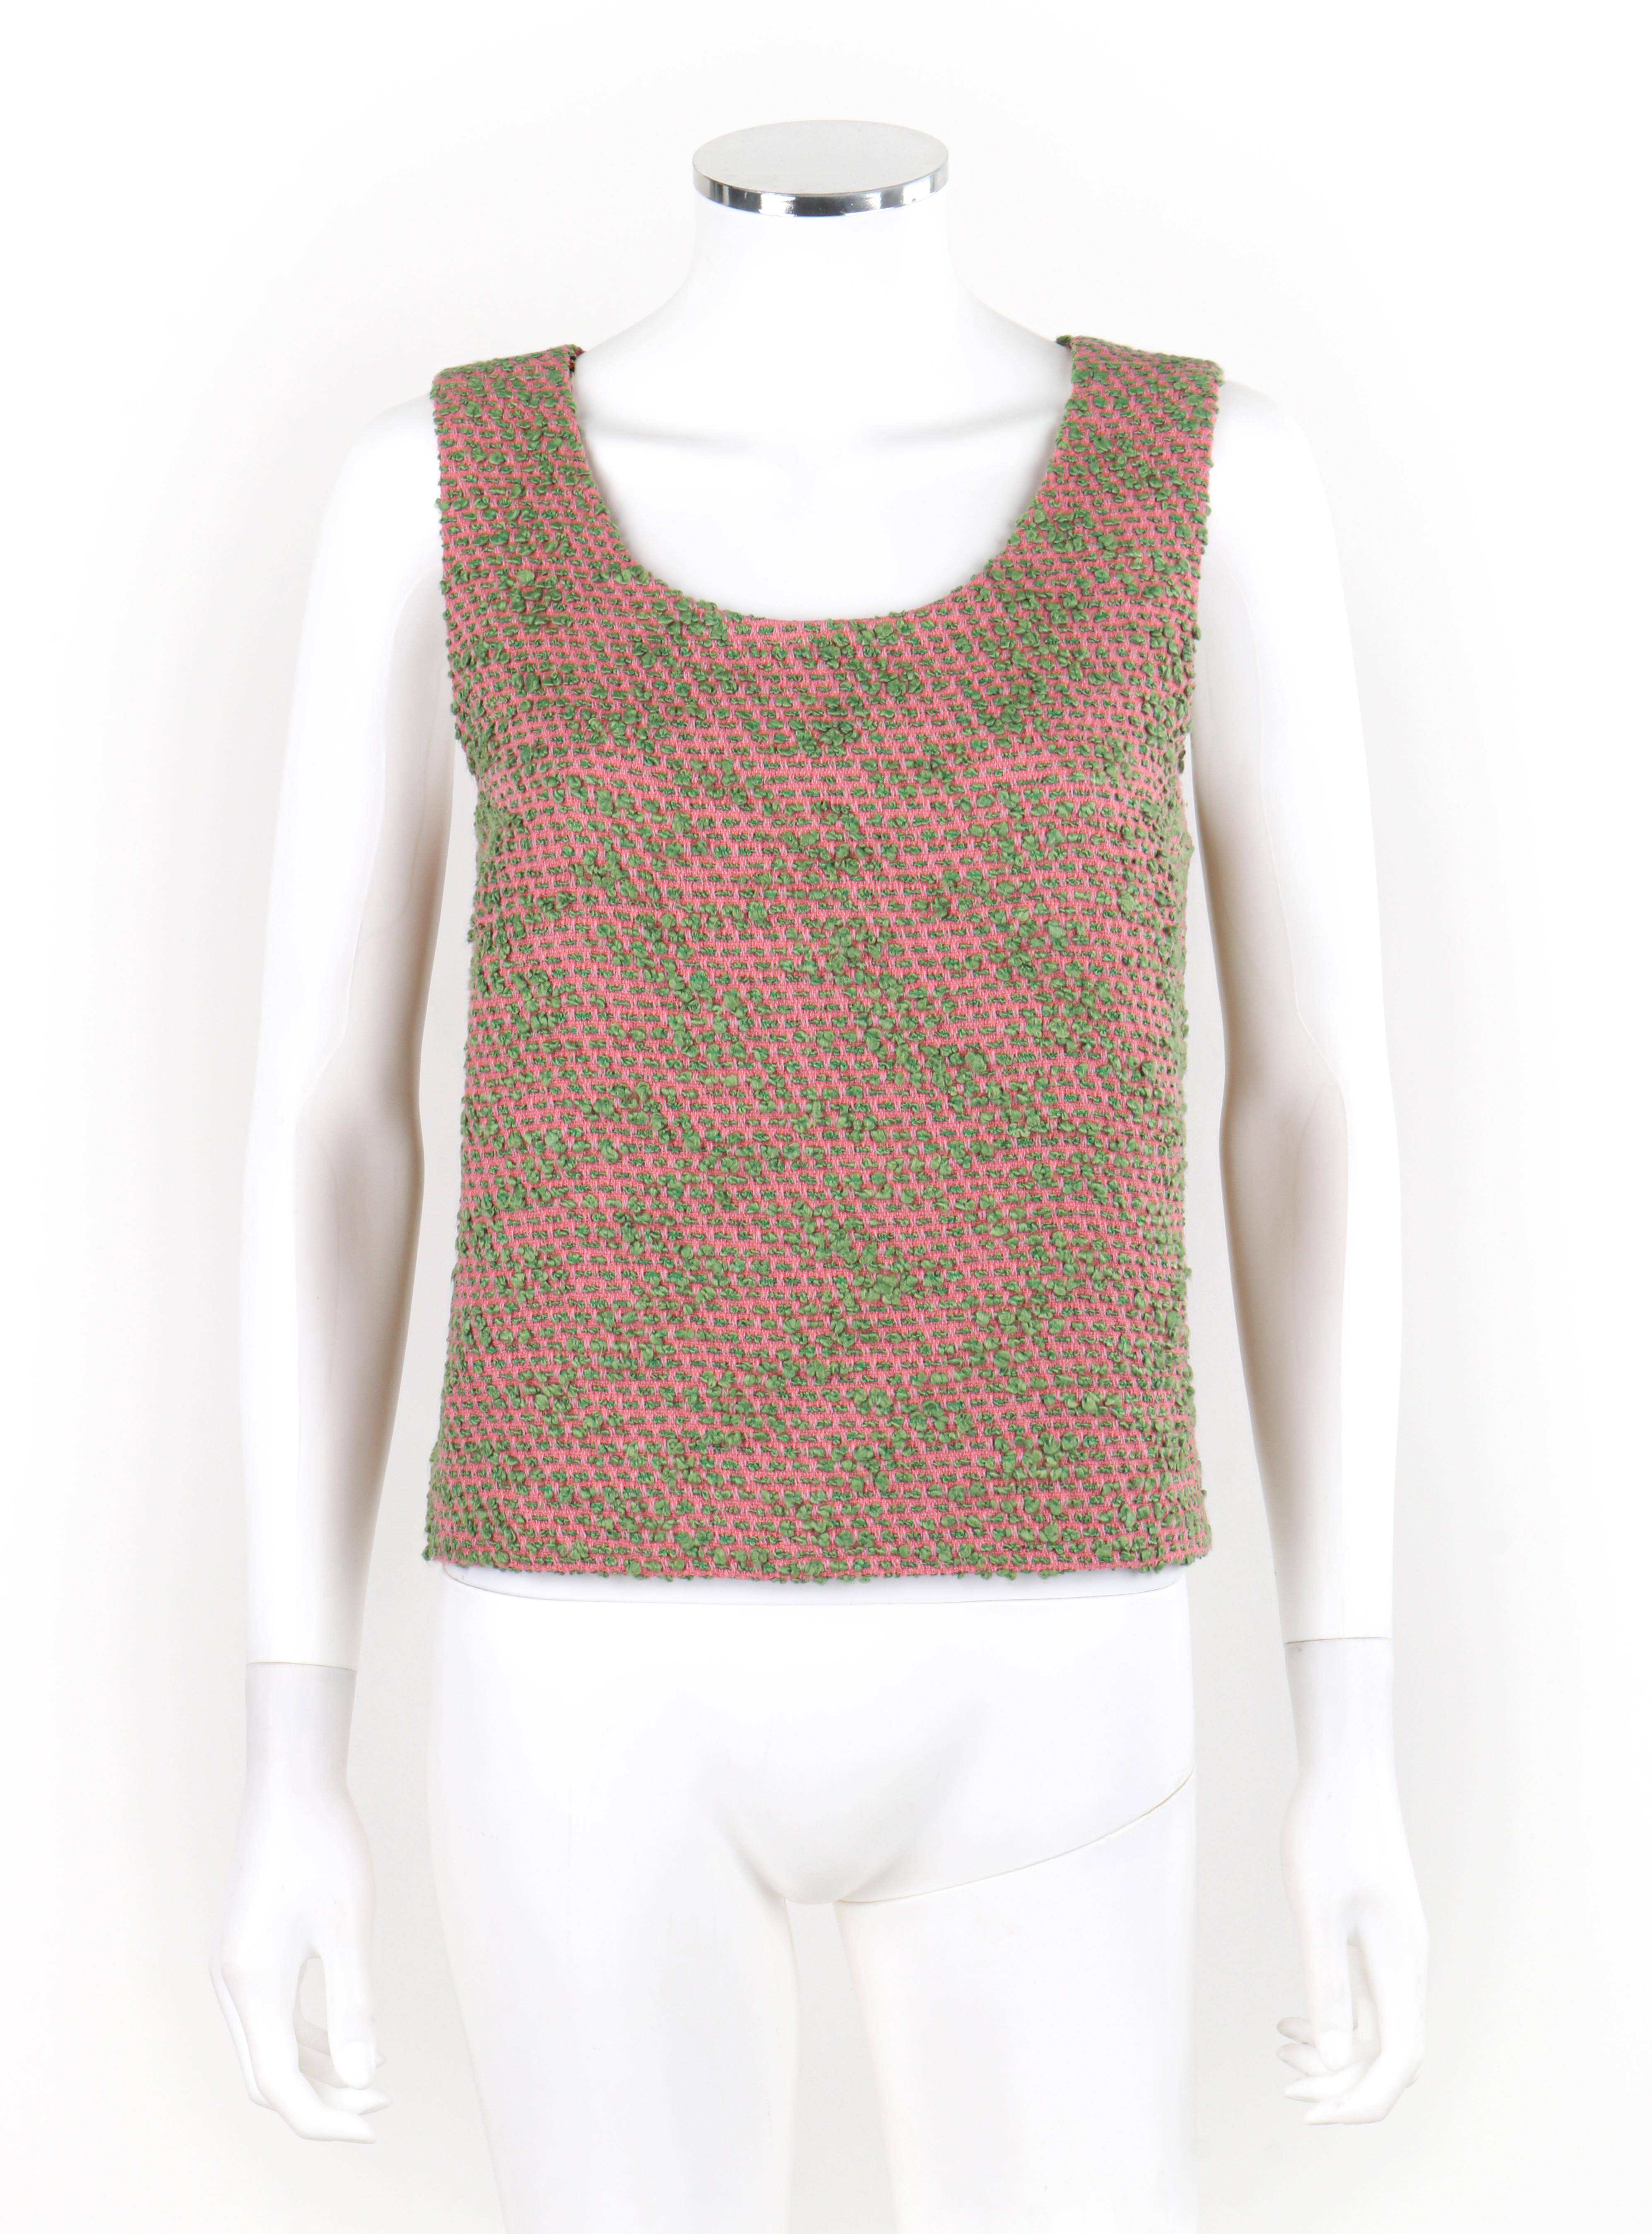 CHANEL c.2000s Pink Green Boucle Knit Silk Jacket & Tank Top Shell 2pc Size 42 en vente 1